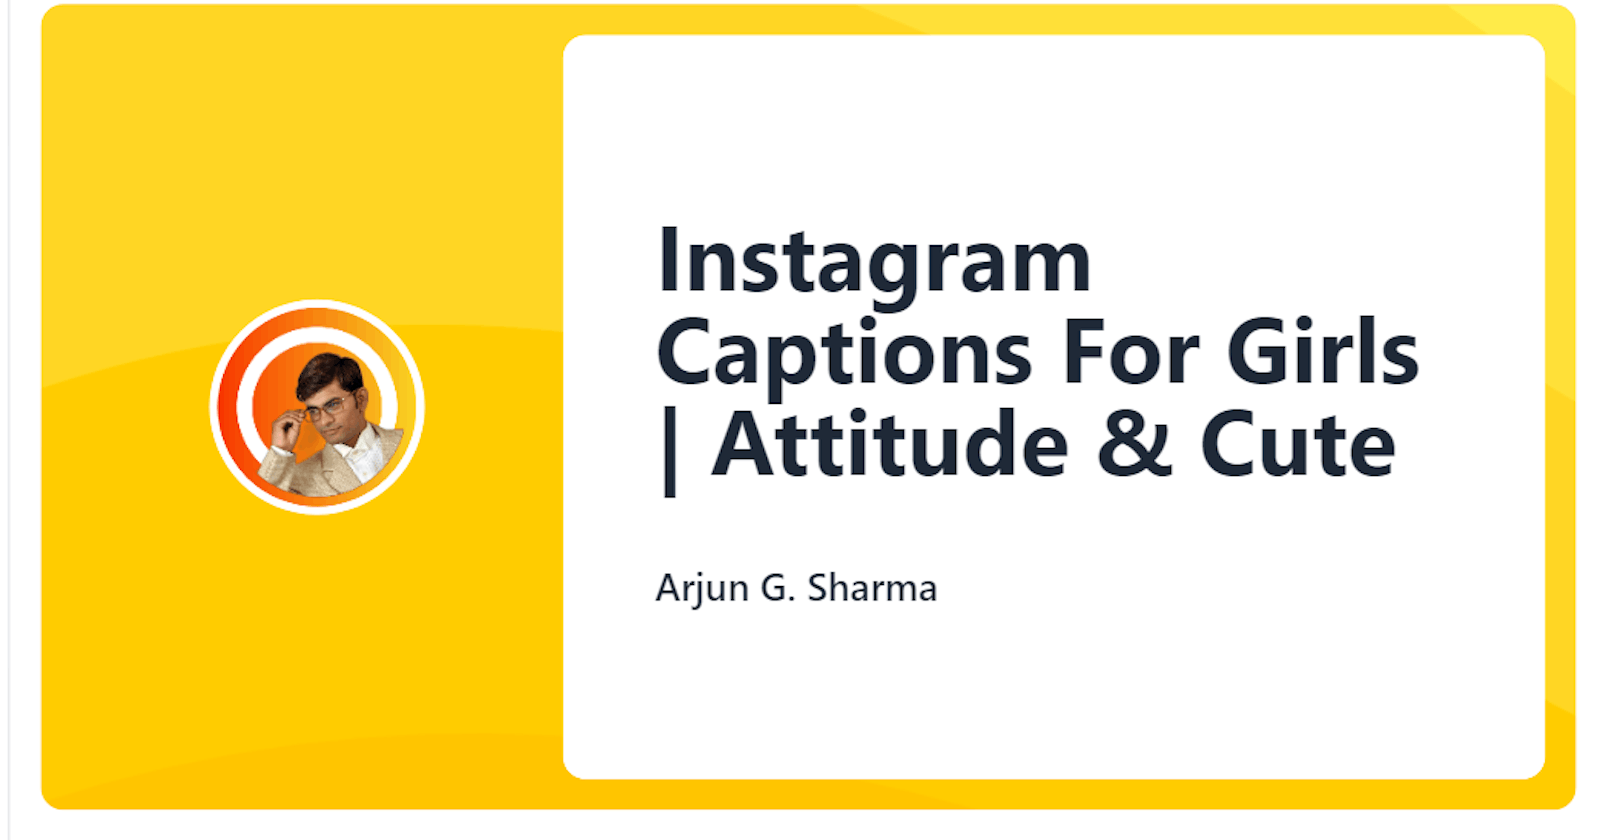 Instagram Captions For Girls | Attitude & Cute